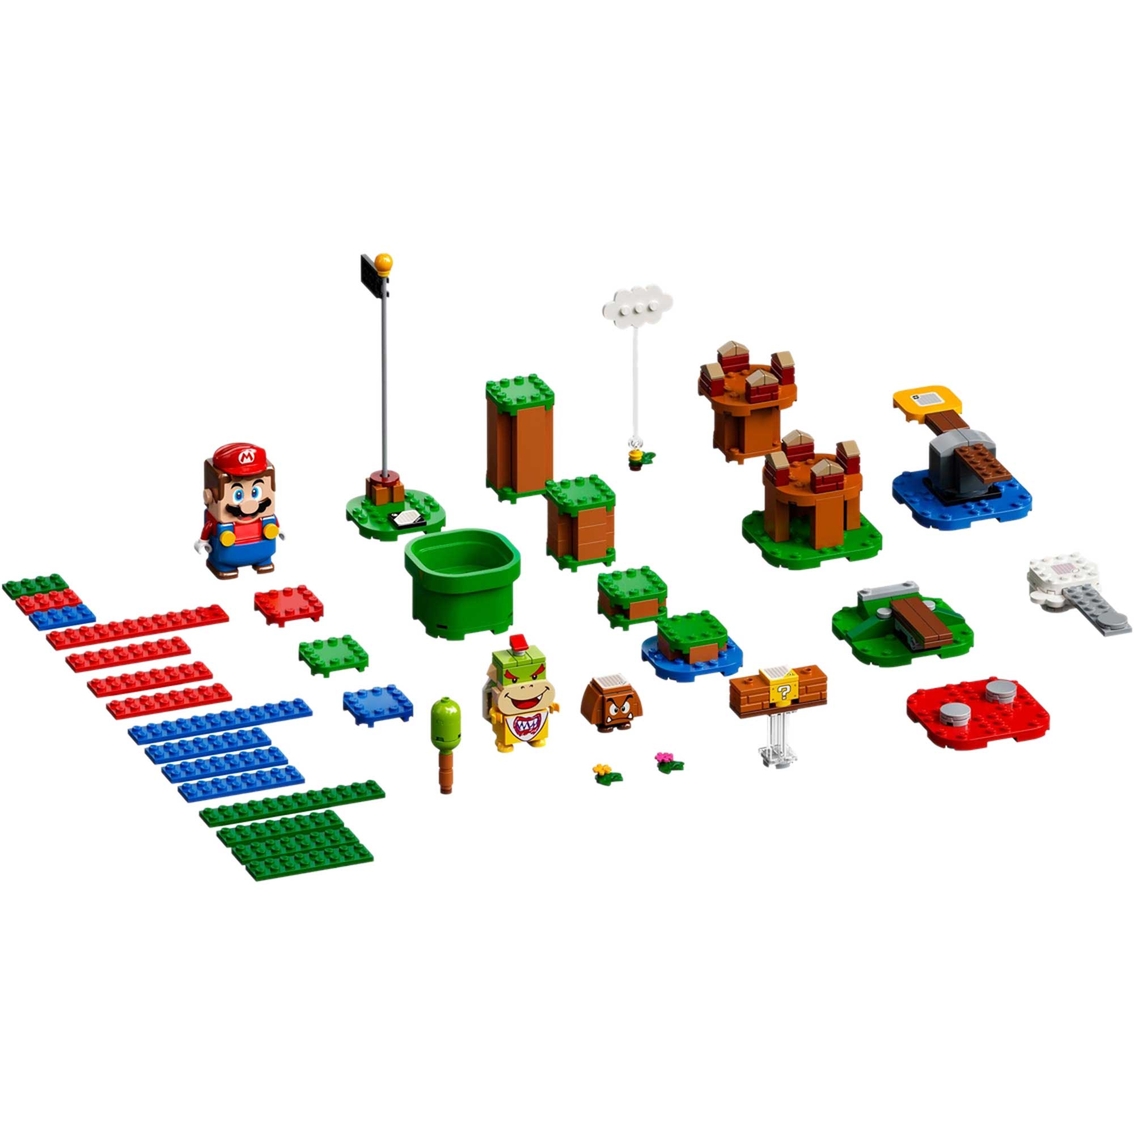 LEGO Super Mario Adventures with Mario Starter Course Toy 71360 - Image 3 of 3